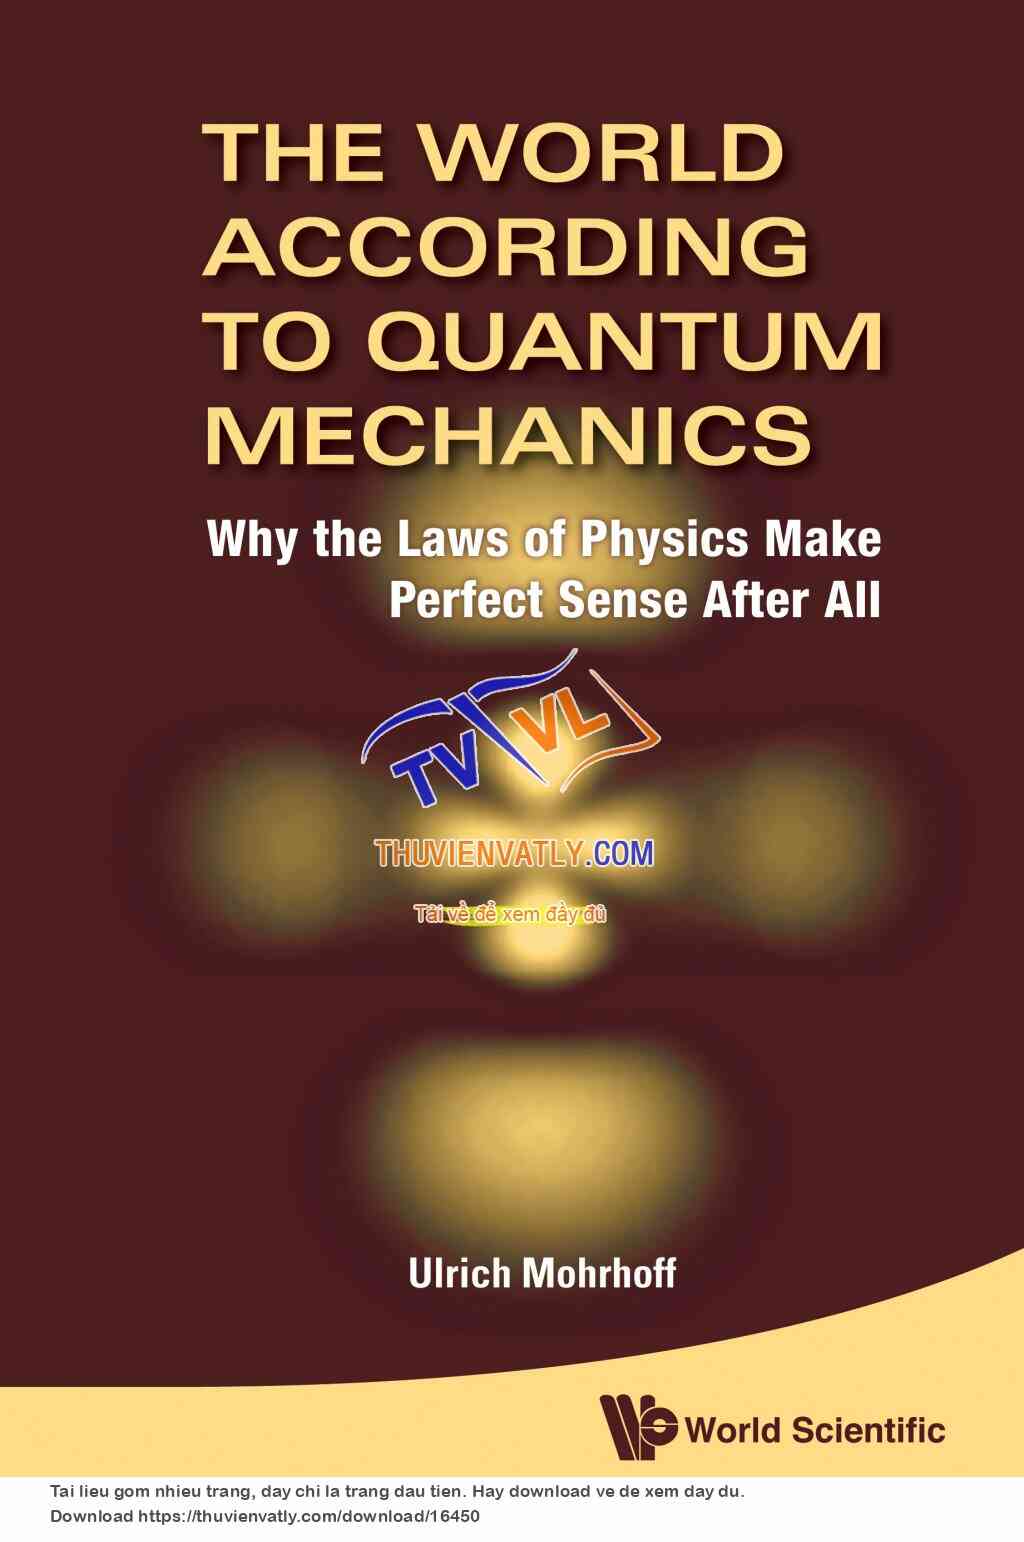 The World According to Quantum Mechanics (Ulrich Mohrhoff, World Scientific 2011)